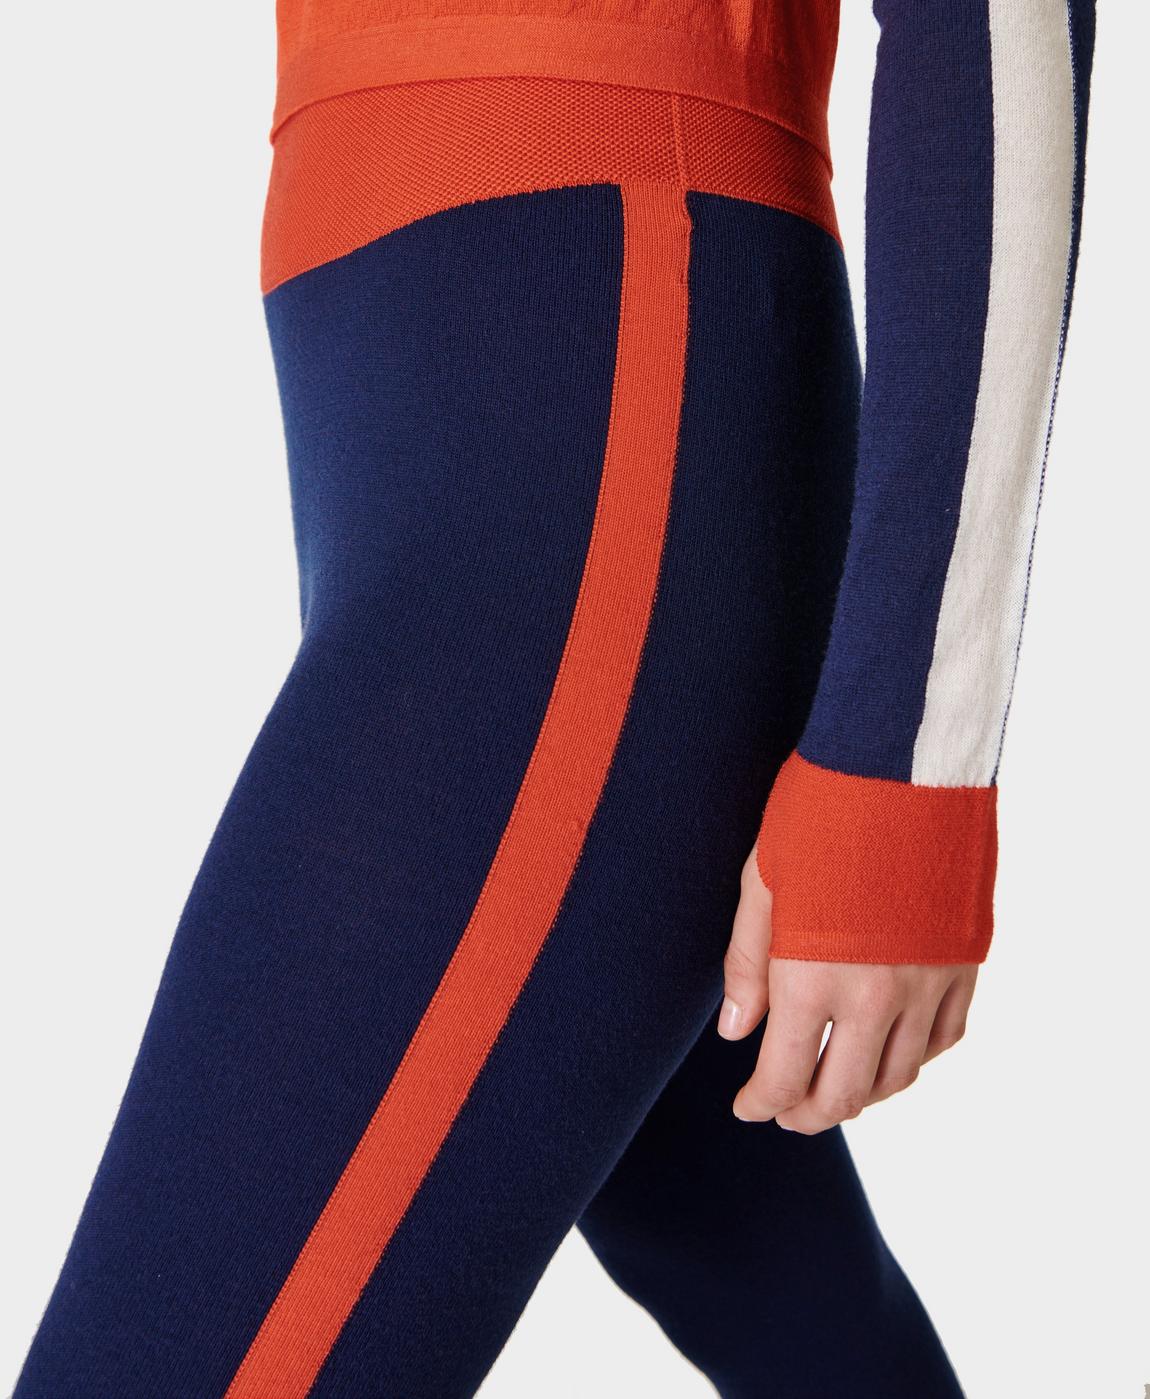 Colour Block Merino Base Layer Legging - XS, Women's Ski Clothes